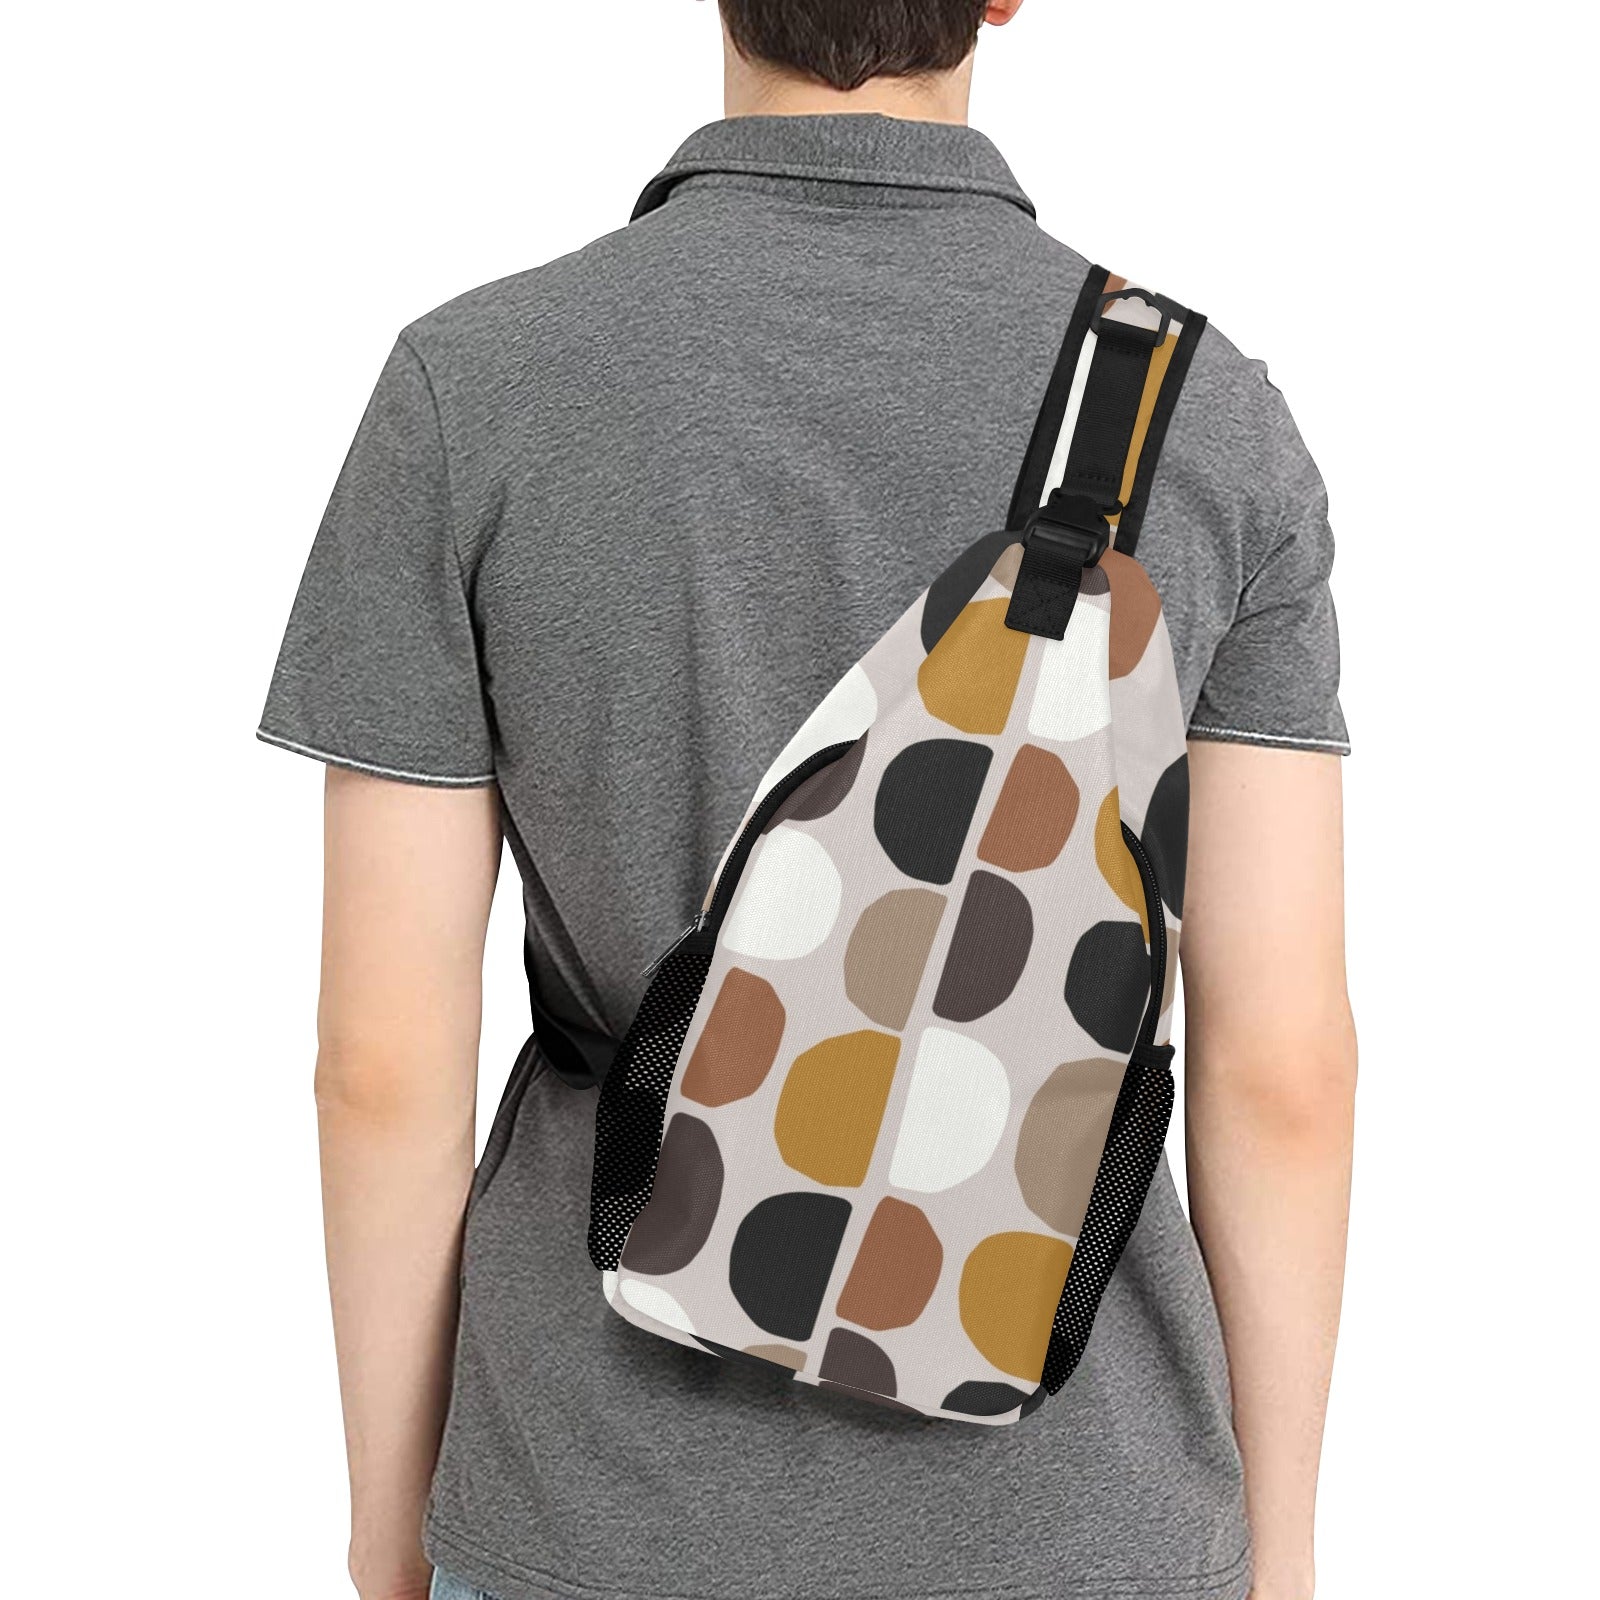 Pebble Brown - Cross-Body Chest Bag Cross-Body Chest Bag